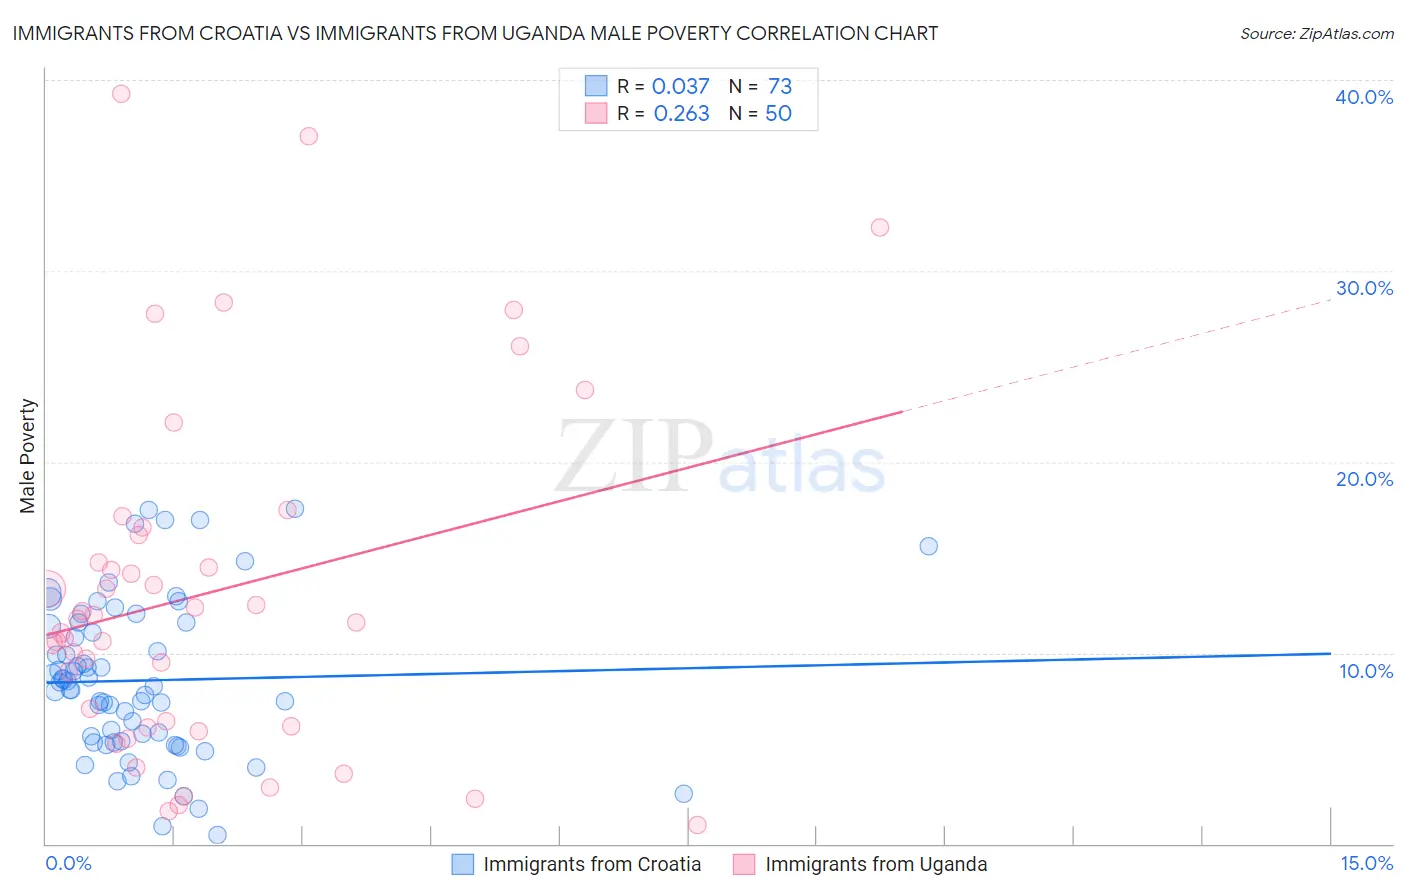 Immigrants from Croatia vs Immigrants from Uganda Male Poverty